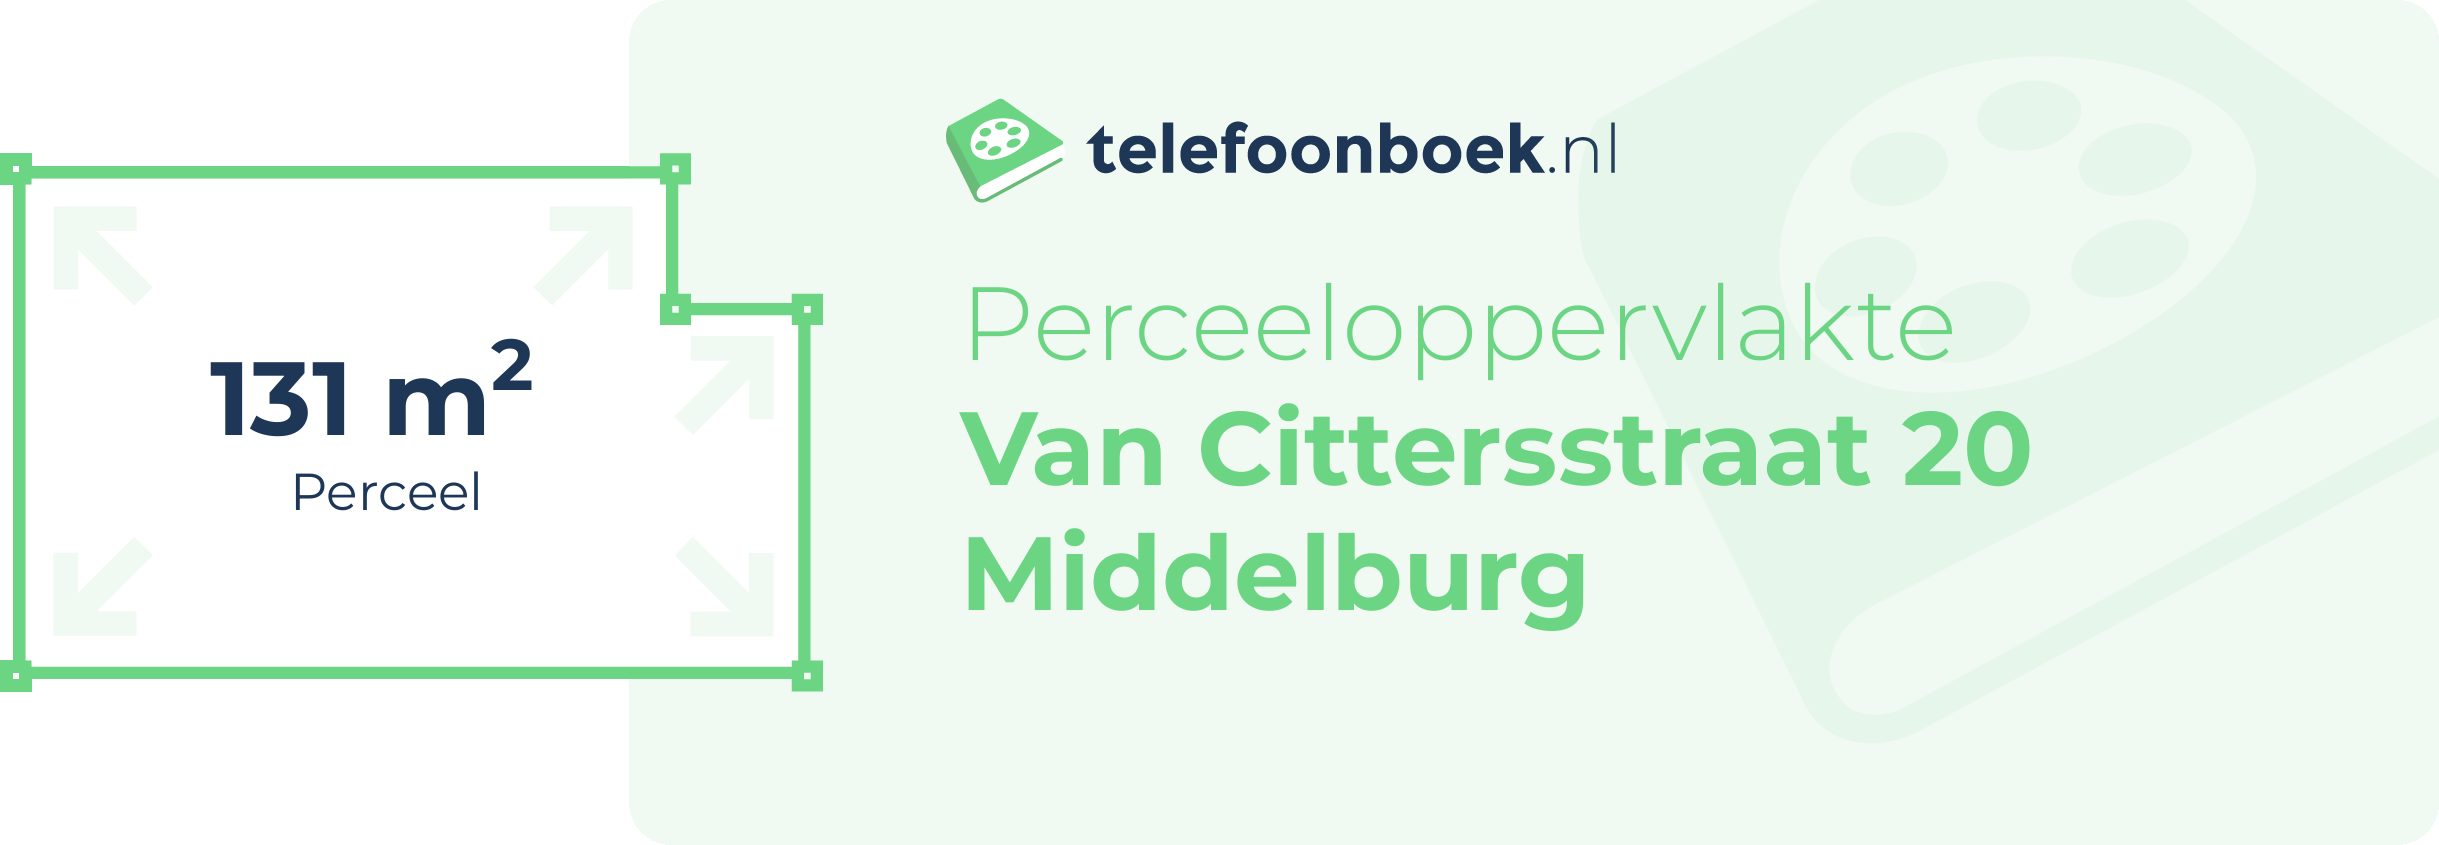 Perceeloppervlakte Van Cittersstraat 20 Middelburg